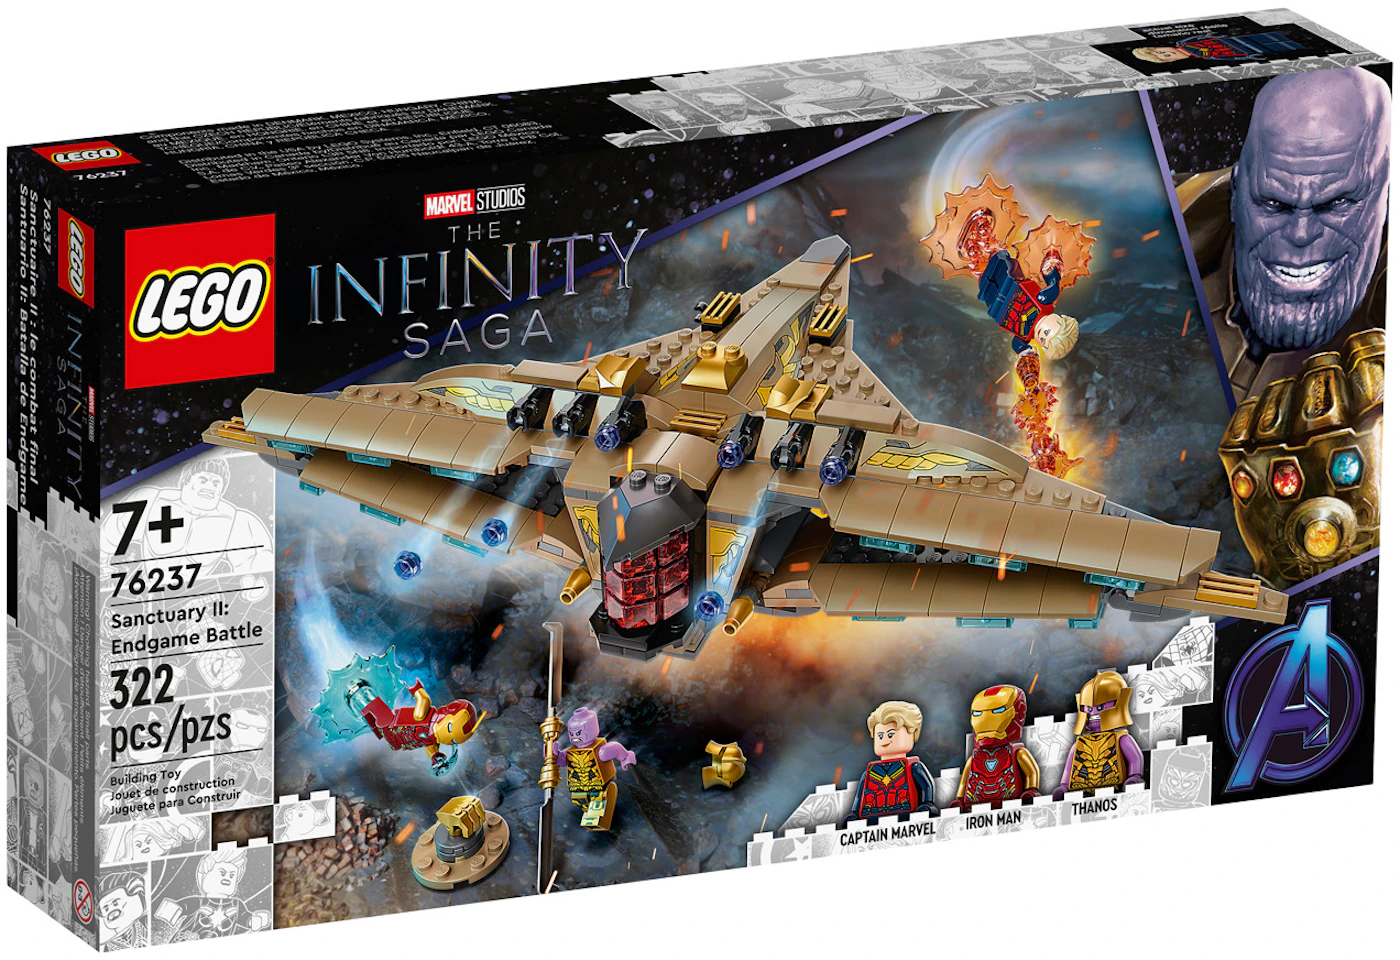 LEGO Marvel Studios The Infinity Saga Sanctuary II: Endgame Battle Set  76237 Gold - FW21 - IT